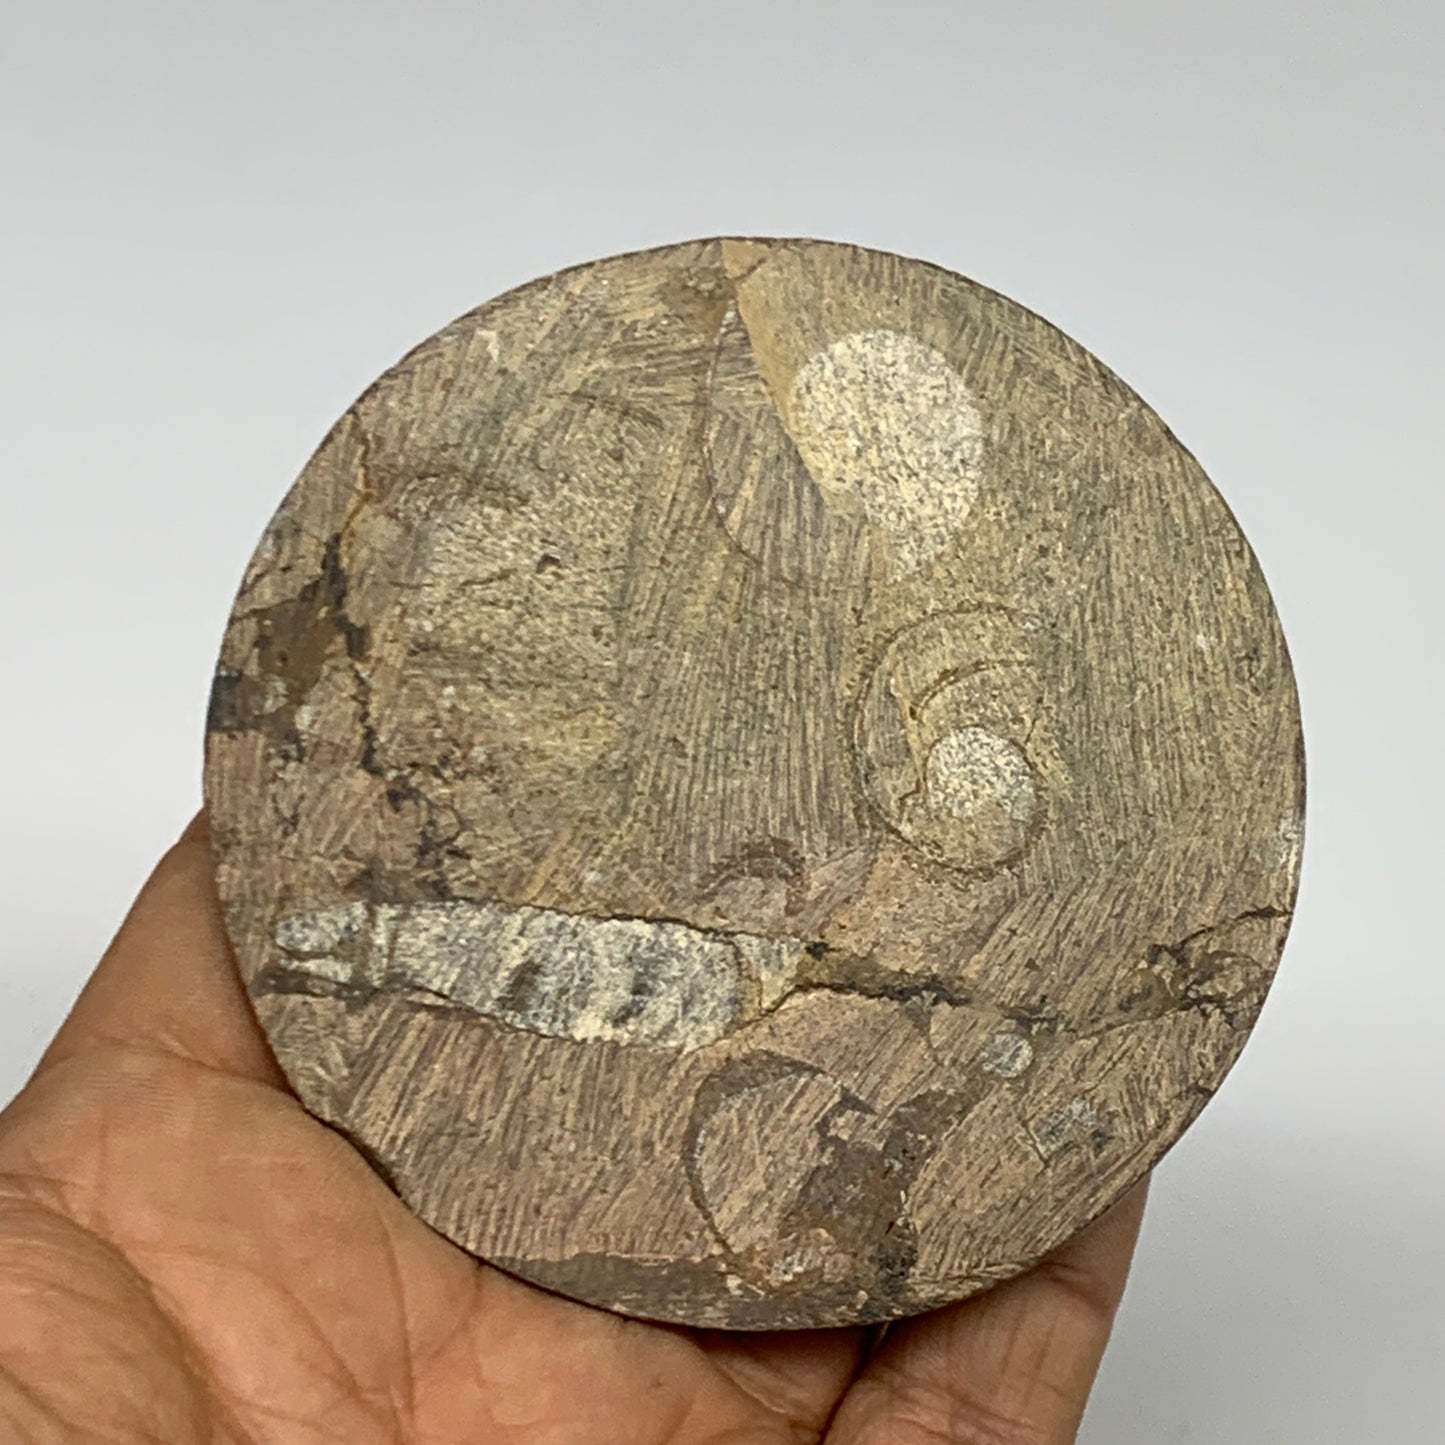 135.4g, 3"x3"x0.7", Goniatite (Button) Ammonite Polished Fossils, B30087